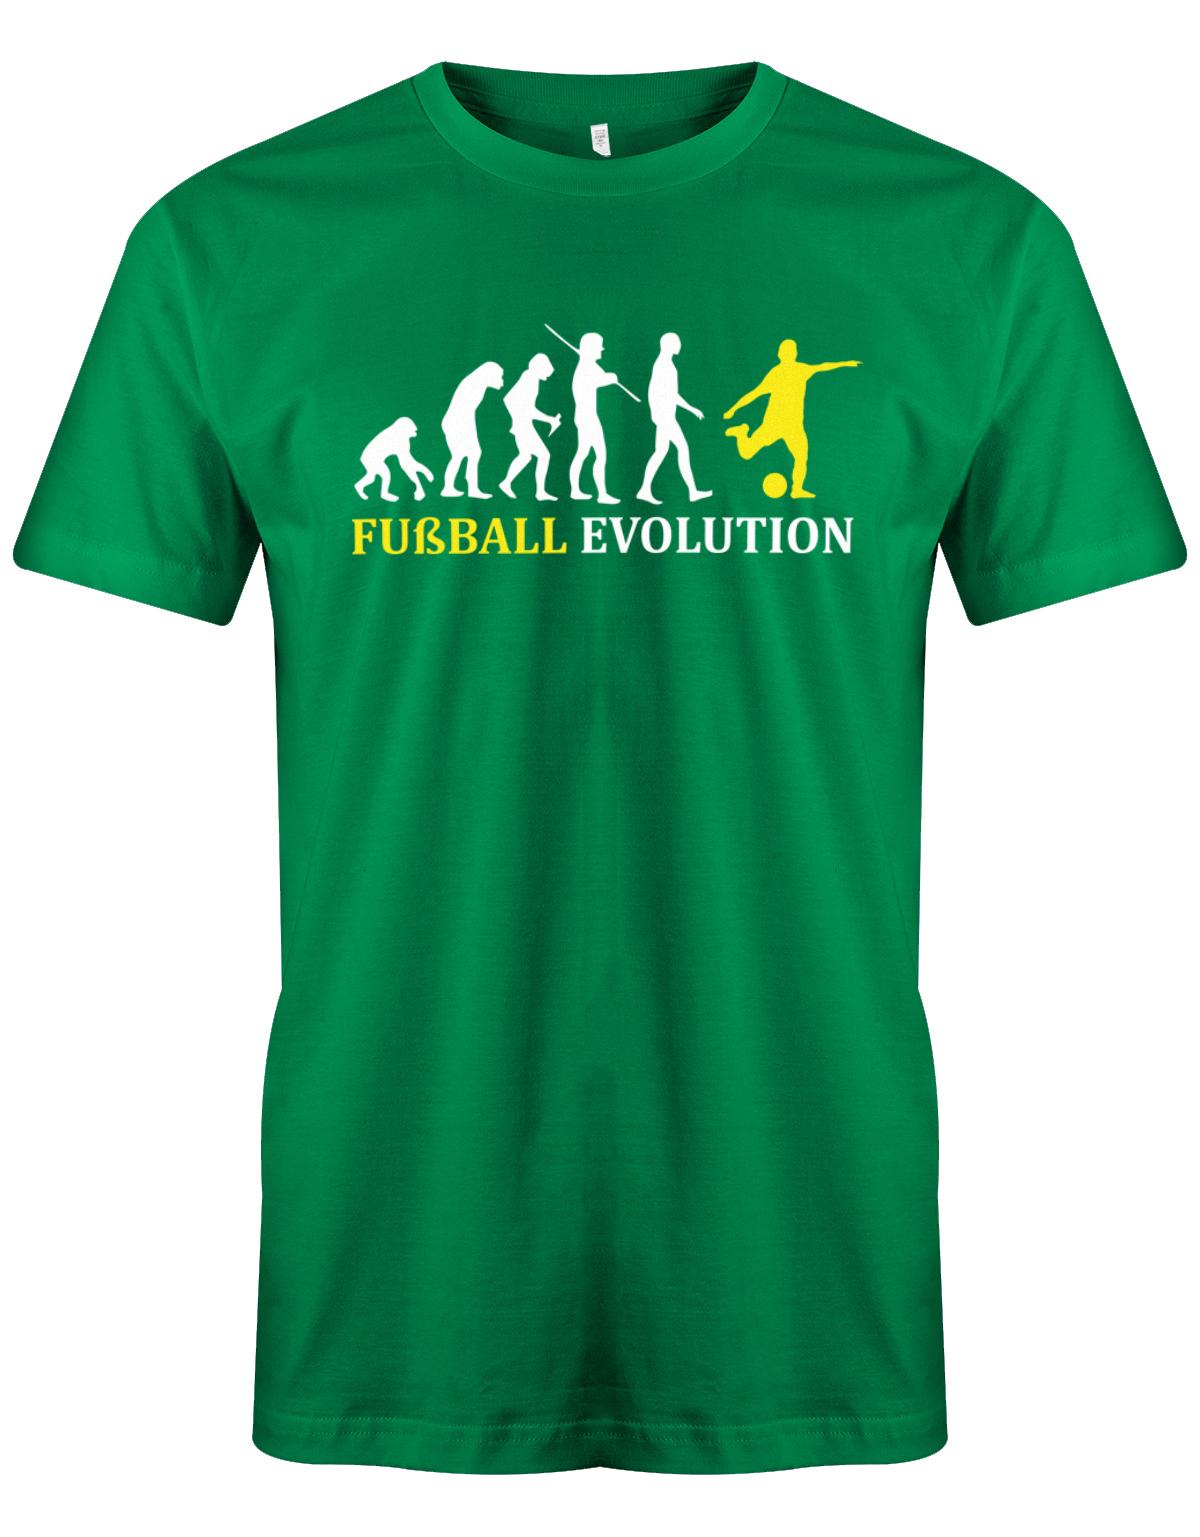 Fussball-Evolution-Herren-Shirt-Gr-n-Gelb